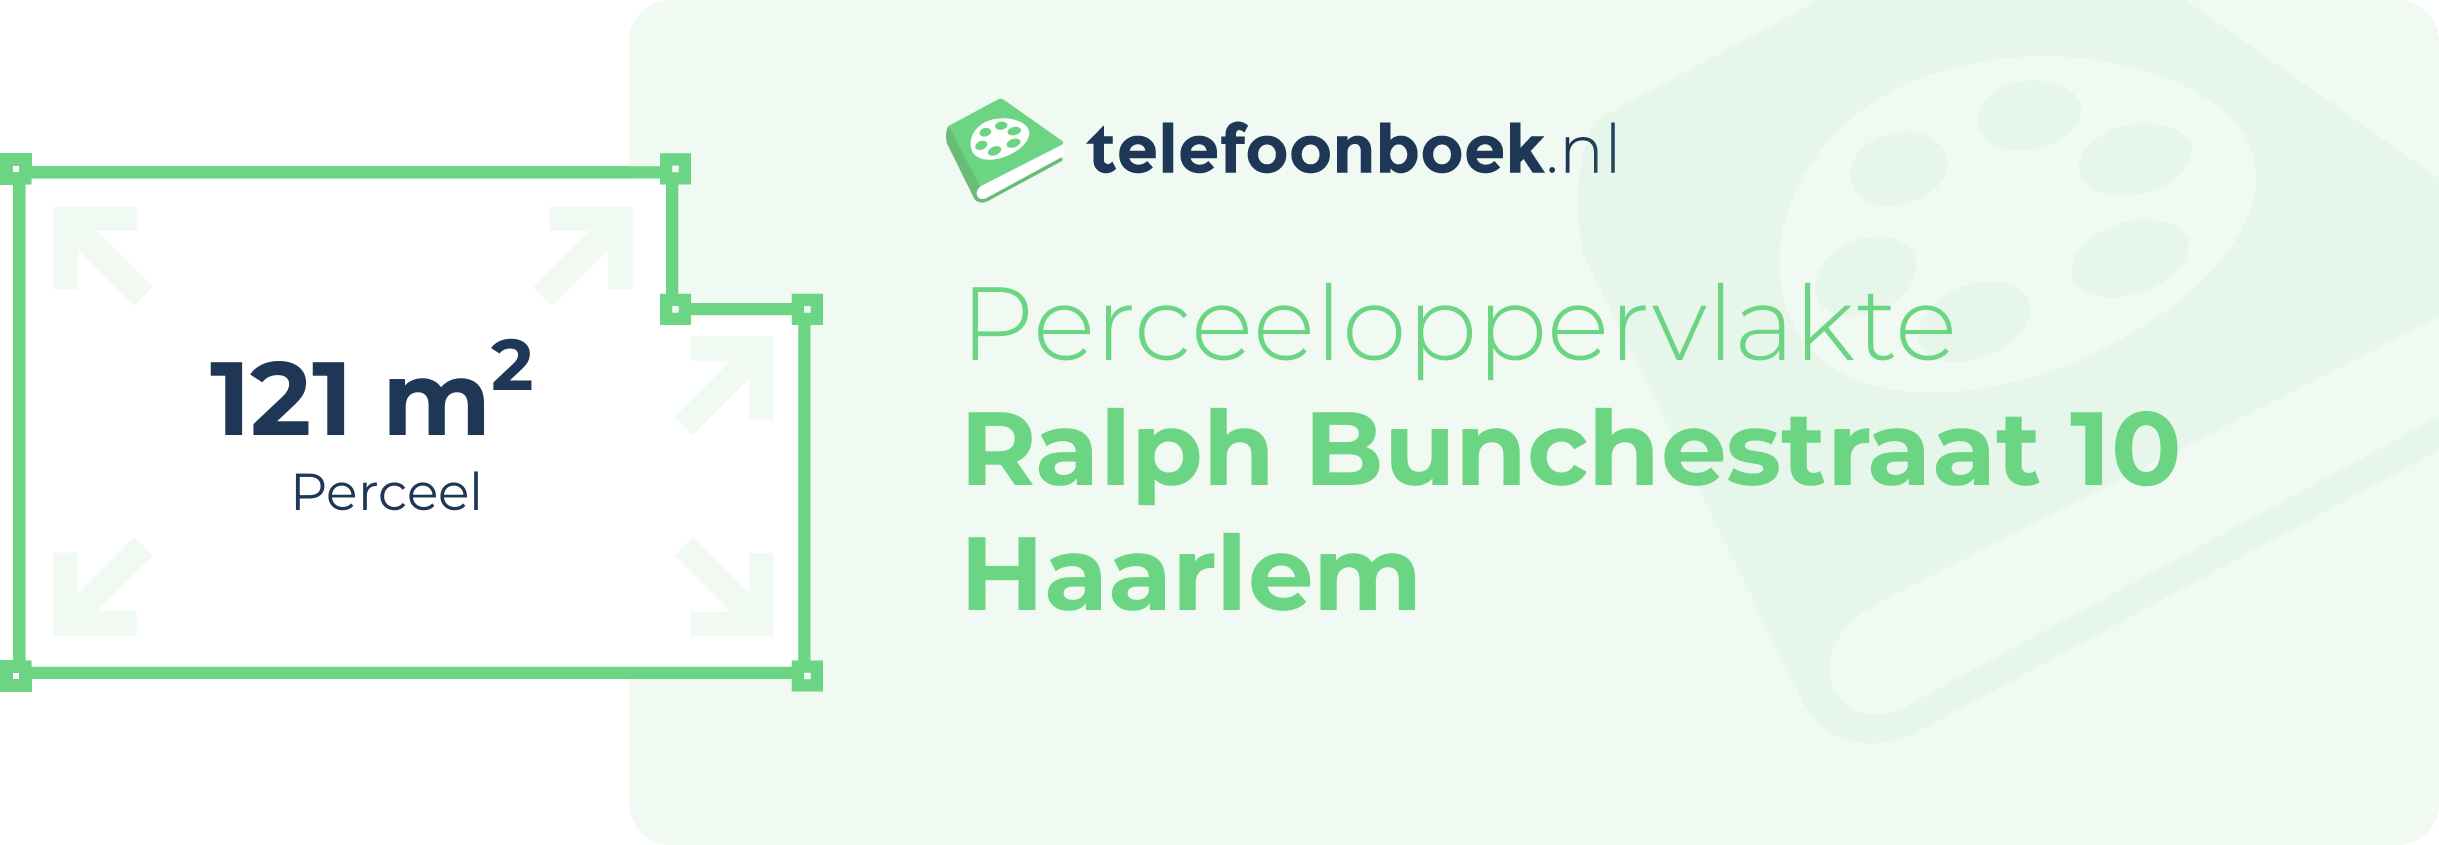 Perceeloppervlakte Ralph Bunchestraat 10 Haarlem